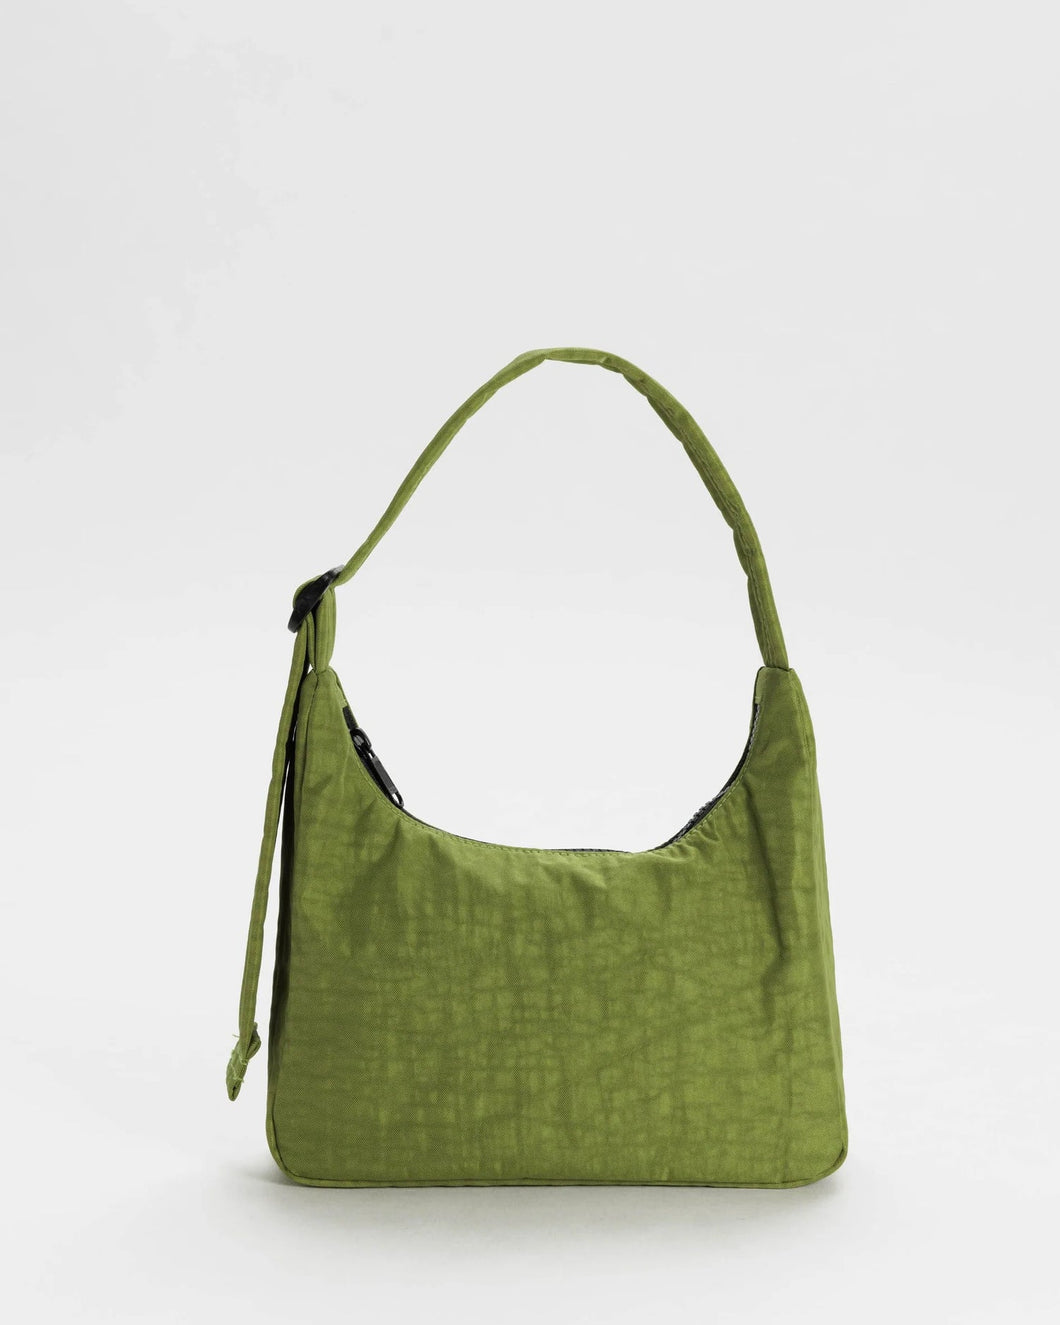 SNILLO STITCH Lunch Bag Shoulder Strap Avocado - Green